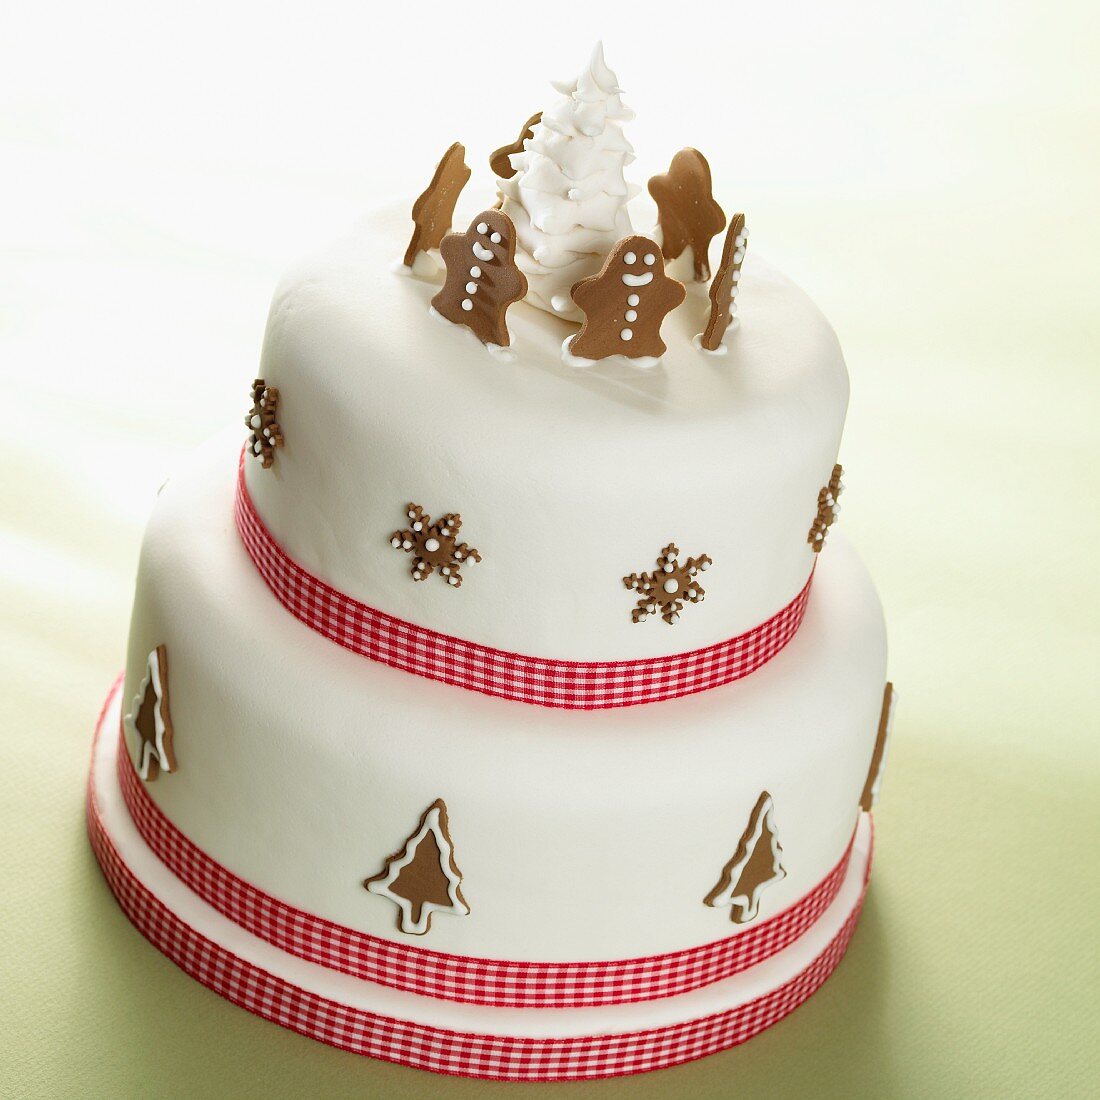 A two-tier Christmas cake